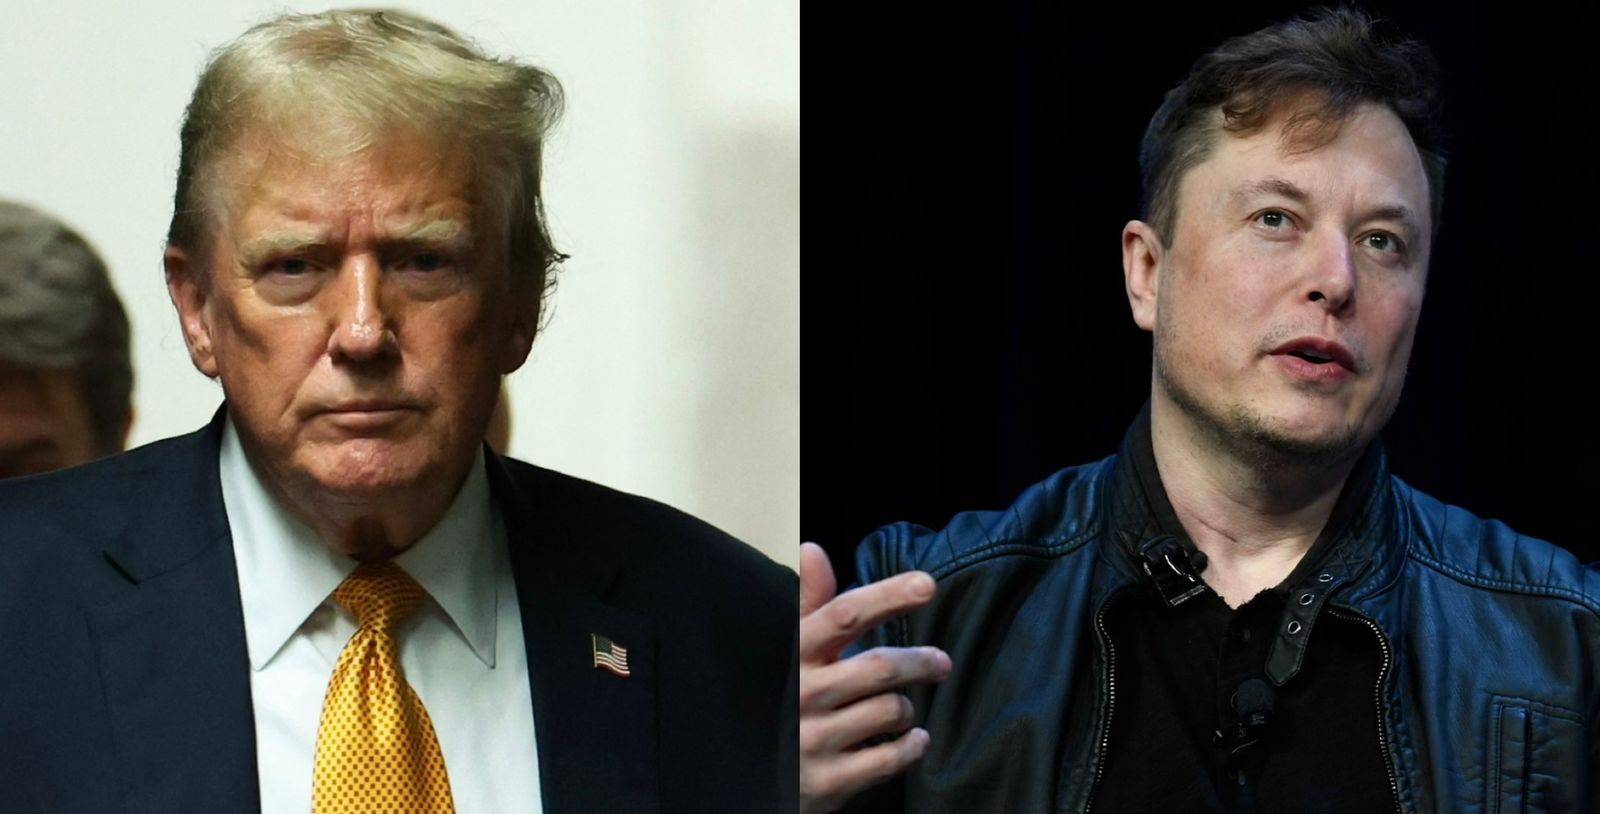 Donald Trump le daría a Elon Musk un cargo de consejero si vuelve a la Casa Blanca